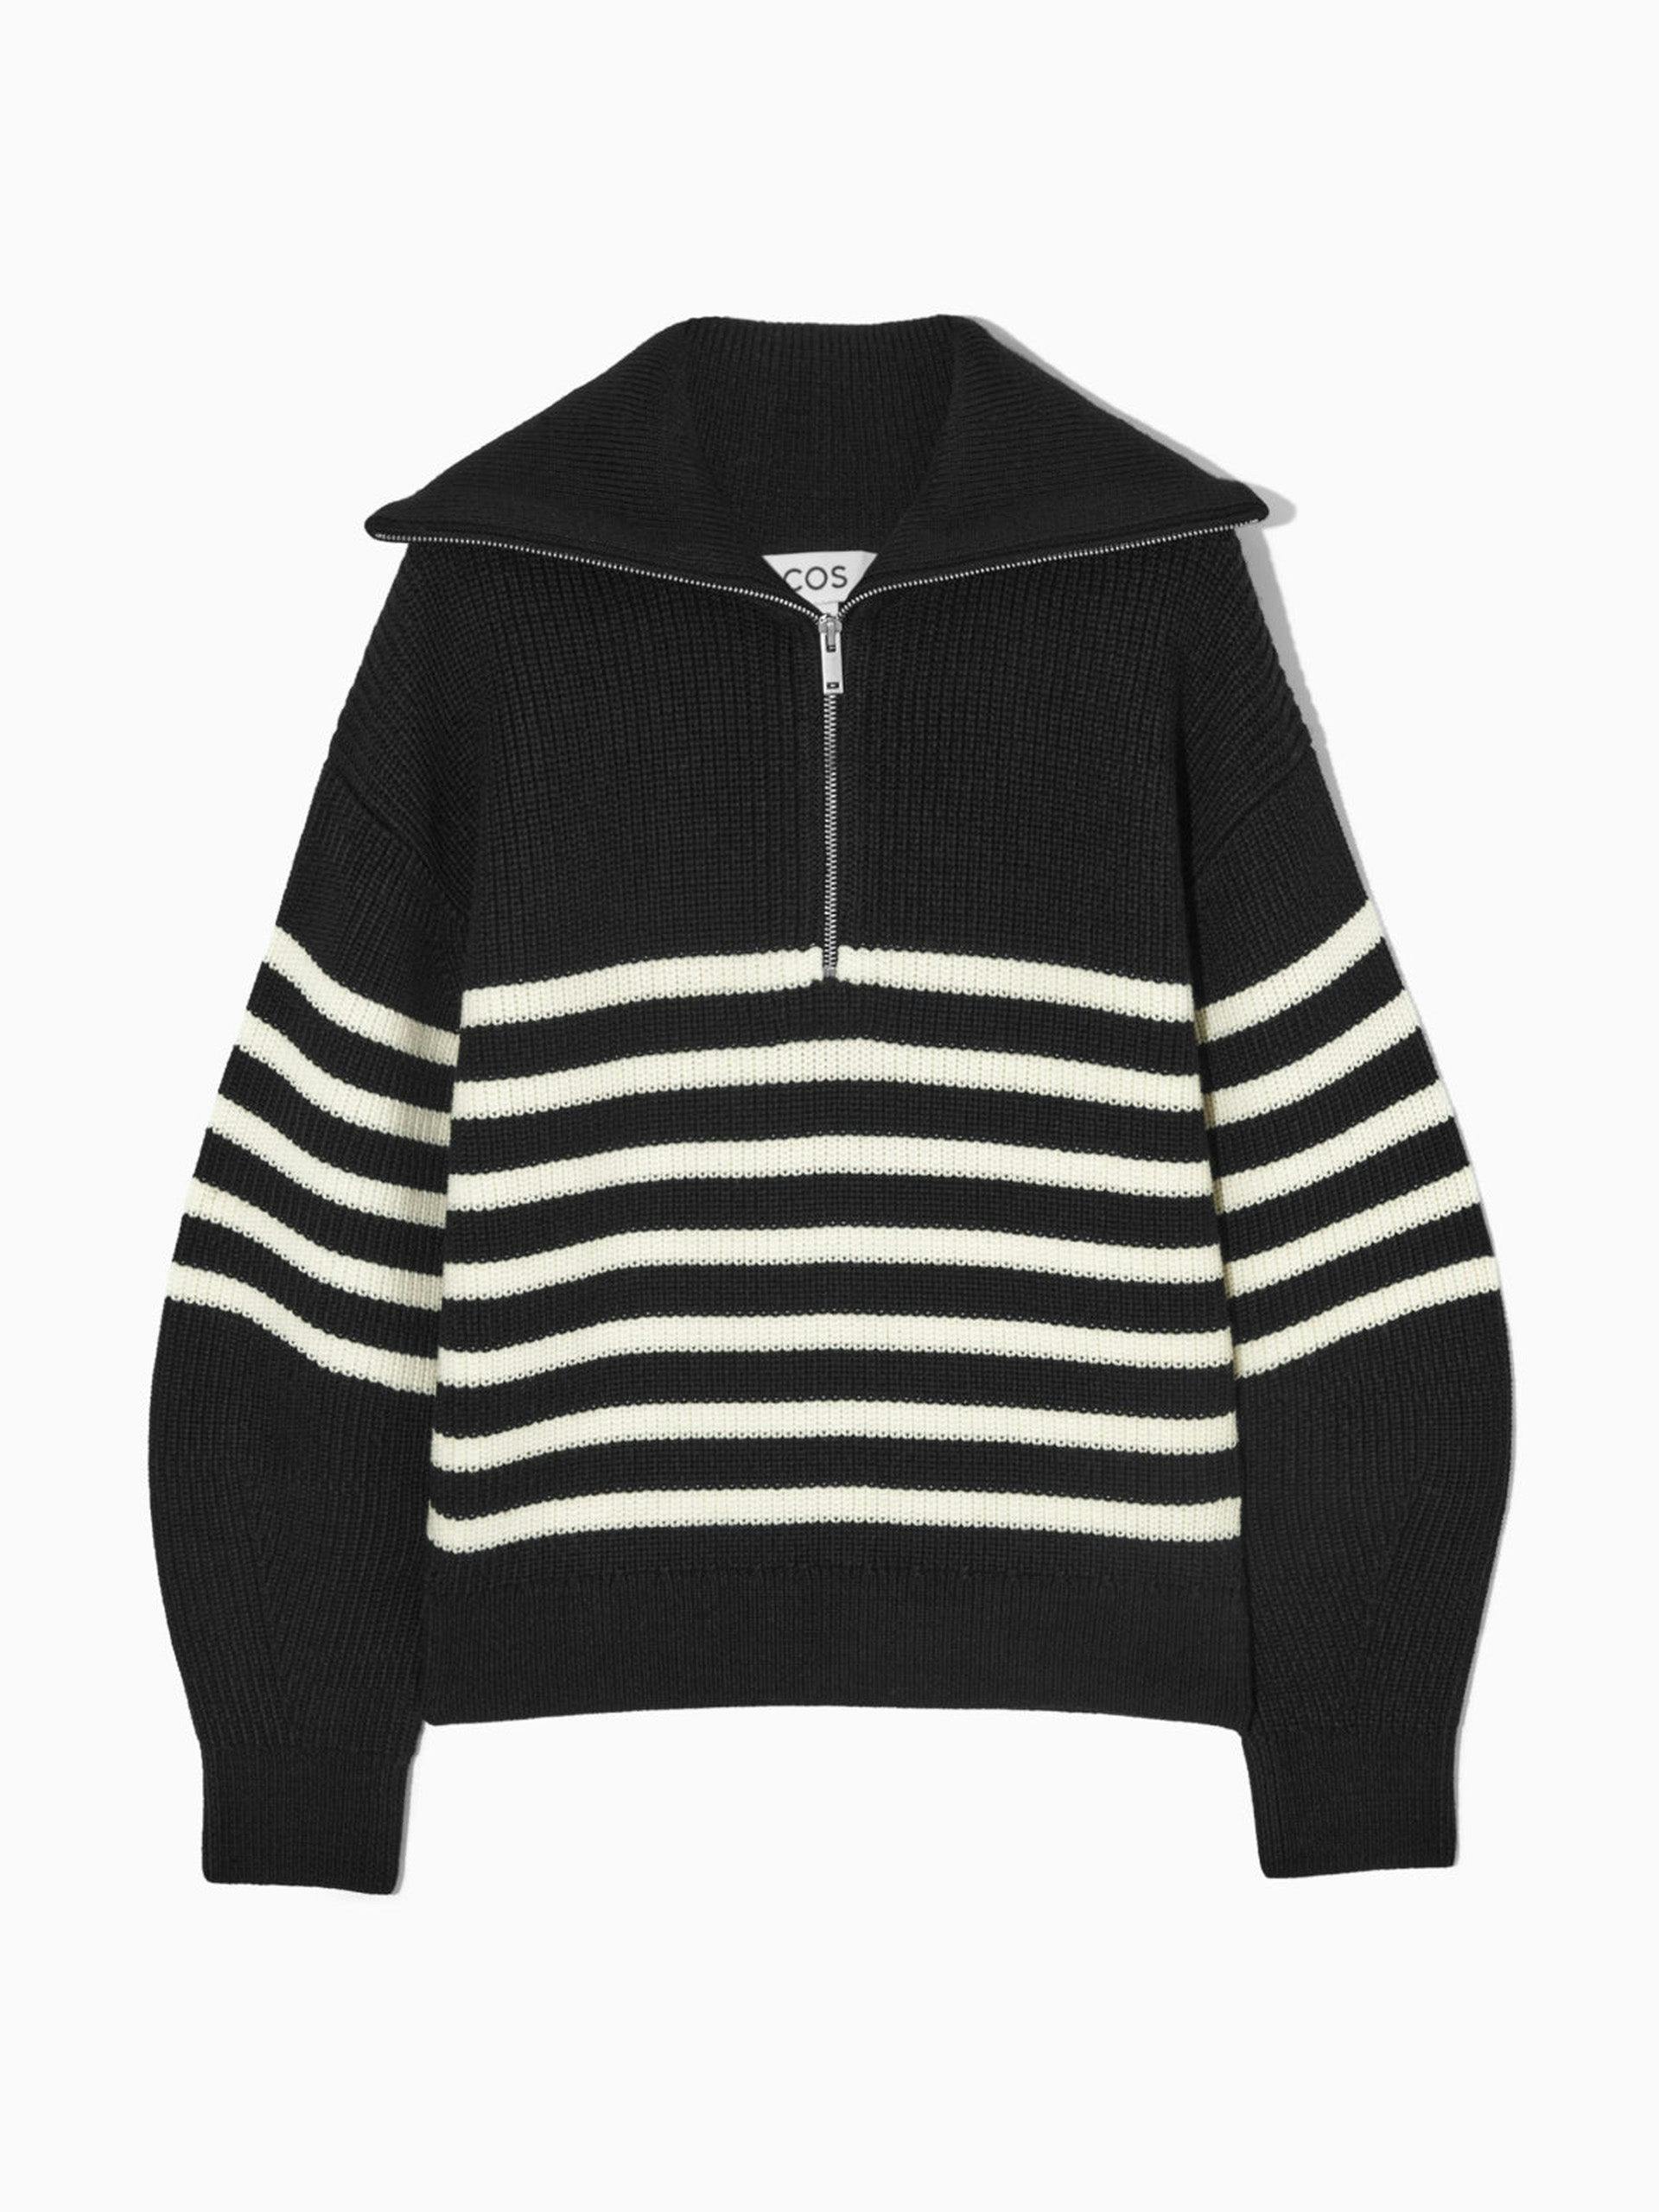 Wool and cotton half-zip jumper